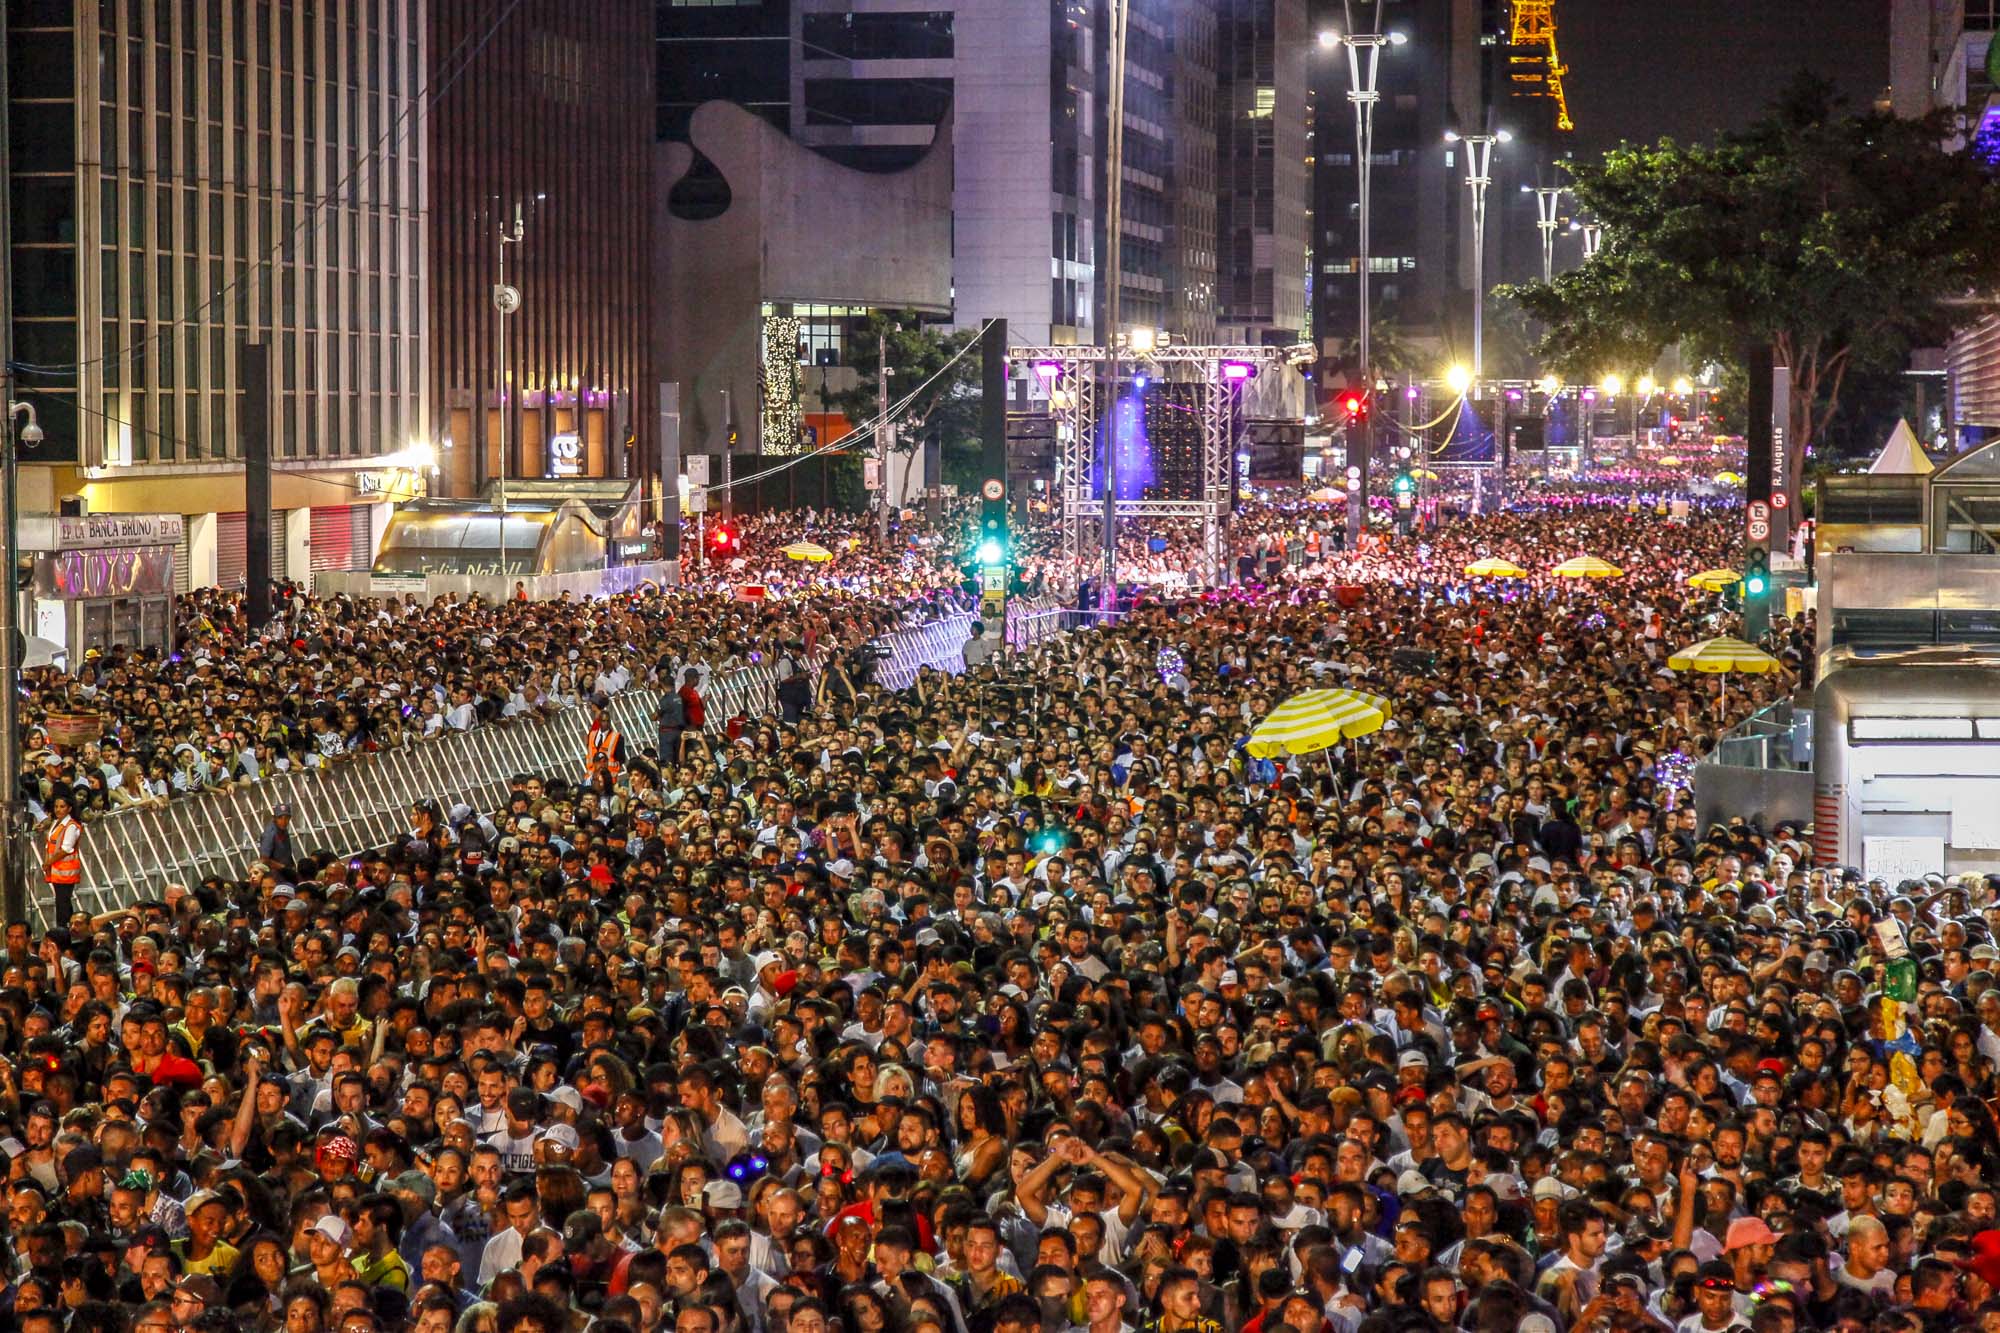 Foto do público na Avenida Paulista lotada